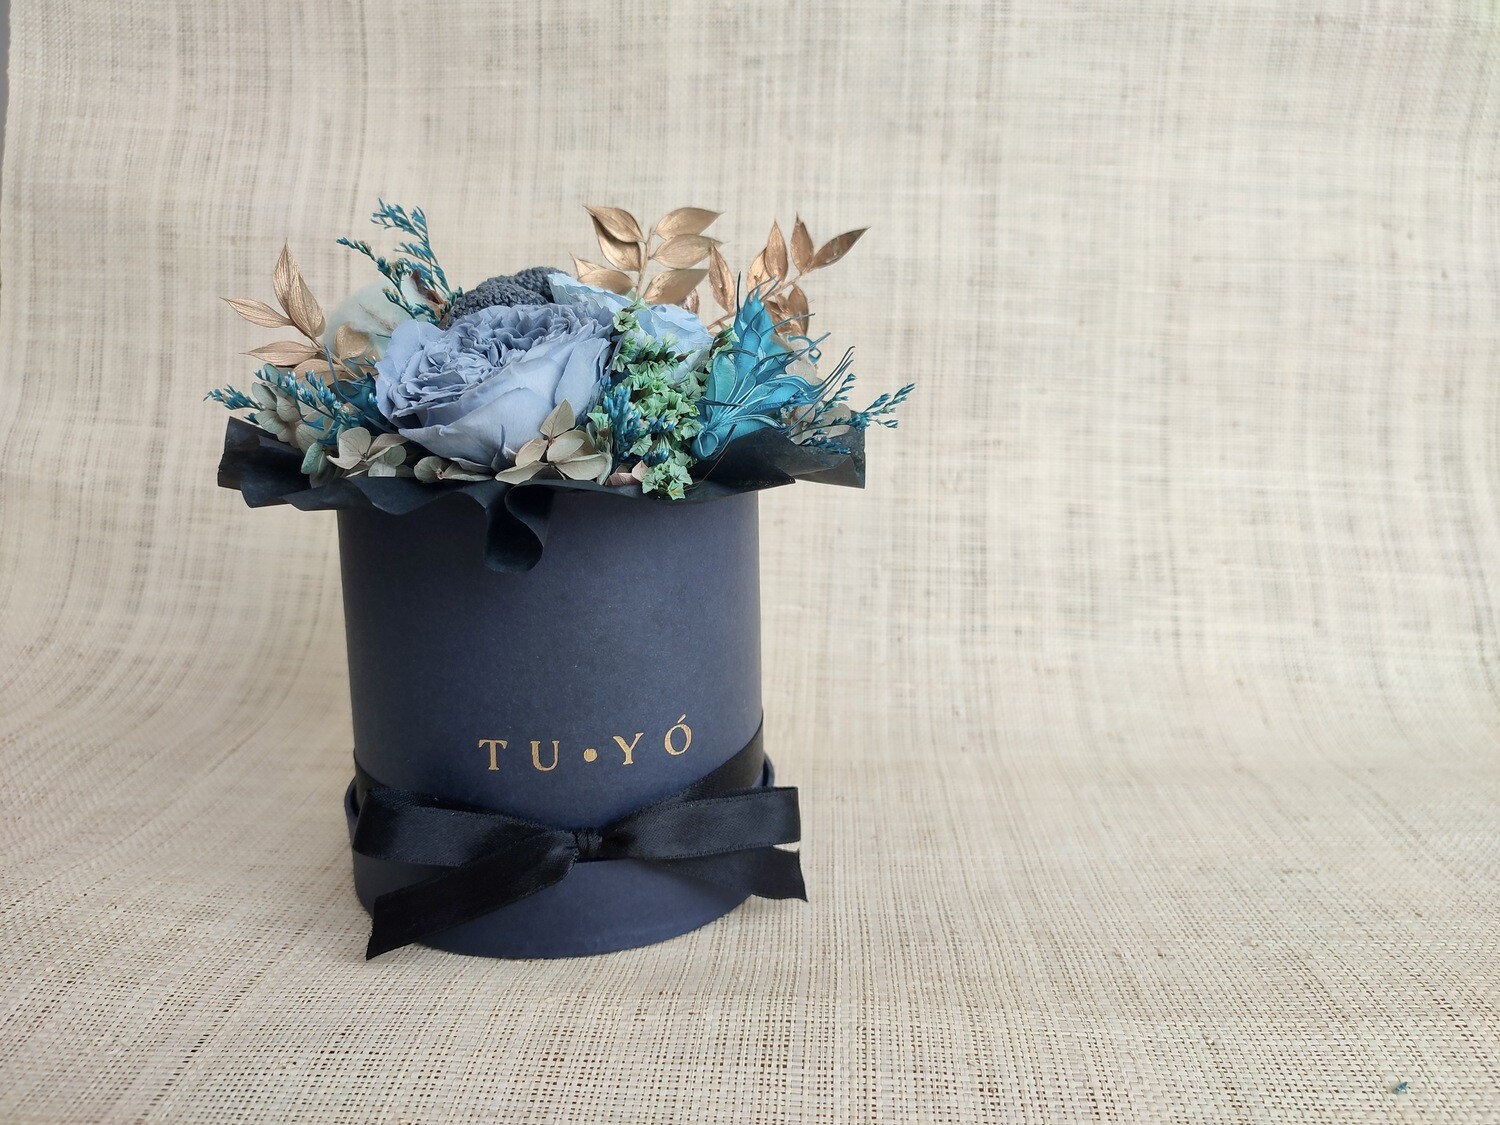 Flower Box For Him | Tuyo - home of premium dried flowers arrangements